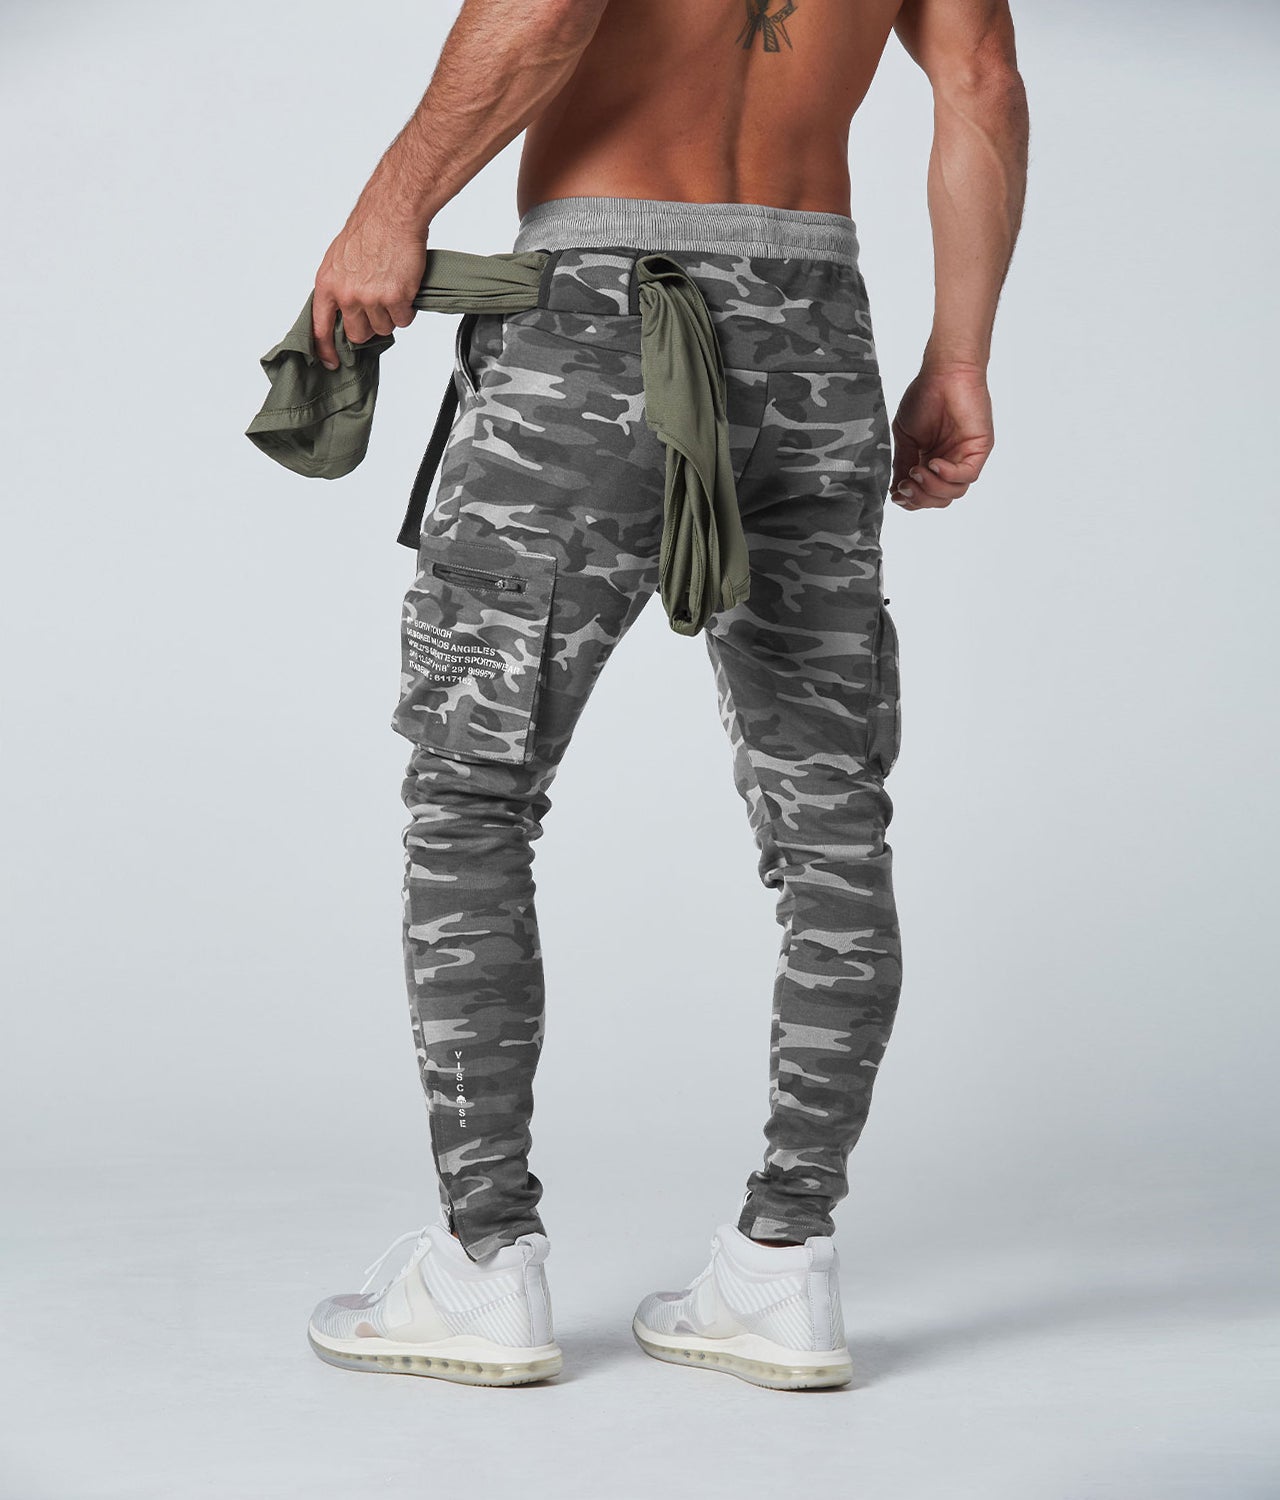 Born Tough Slim Fit Gym Workout Cargo Jogger Pants For Men Grey Camo -  Elite Sports